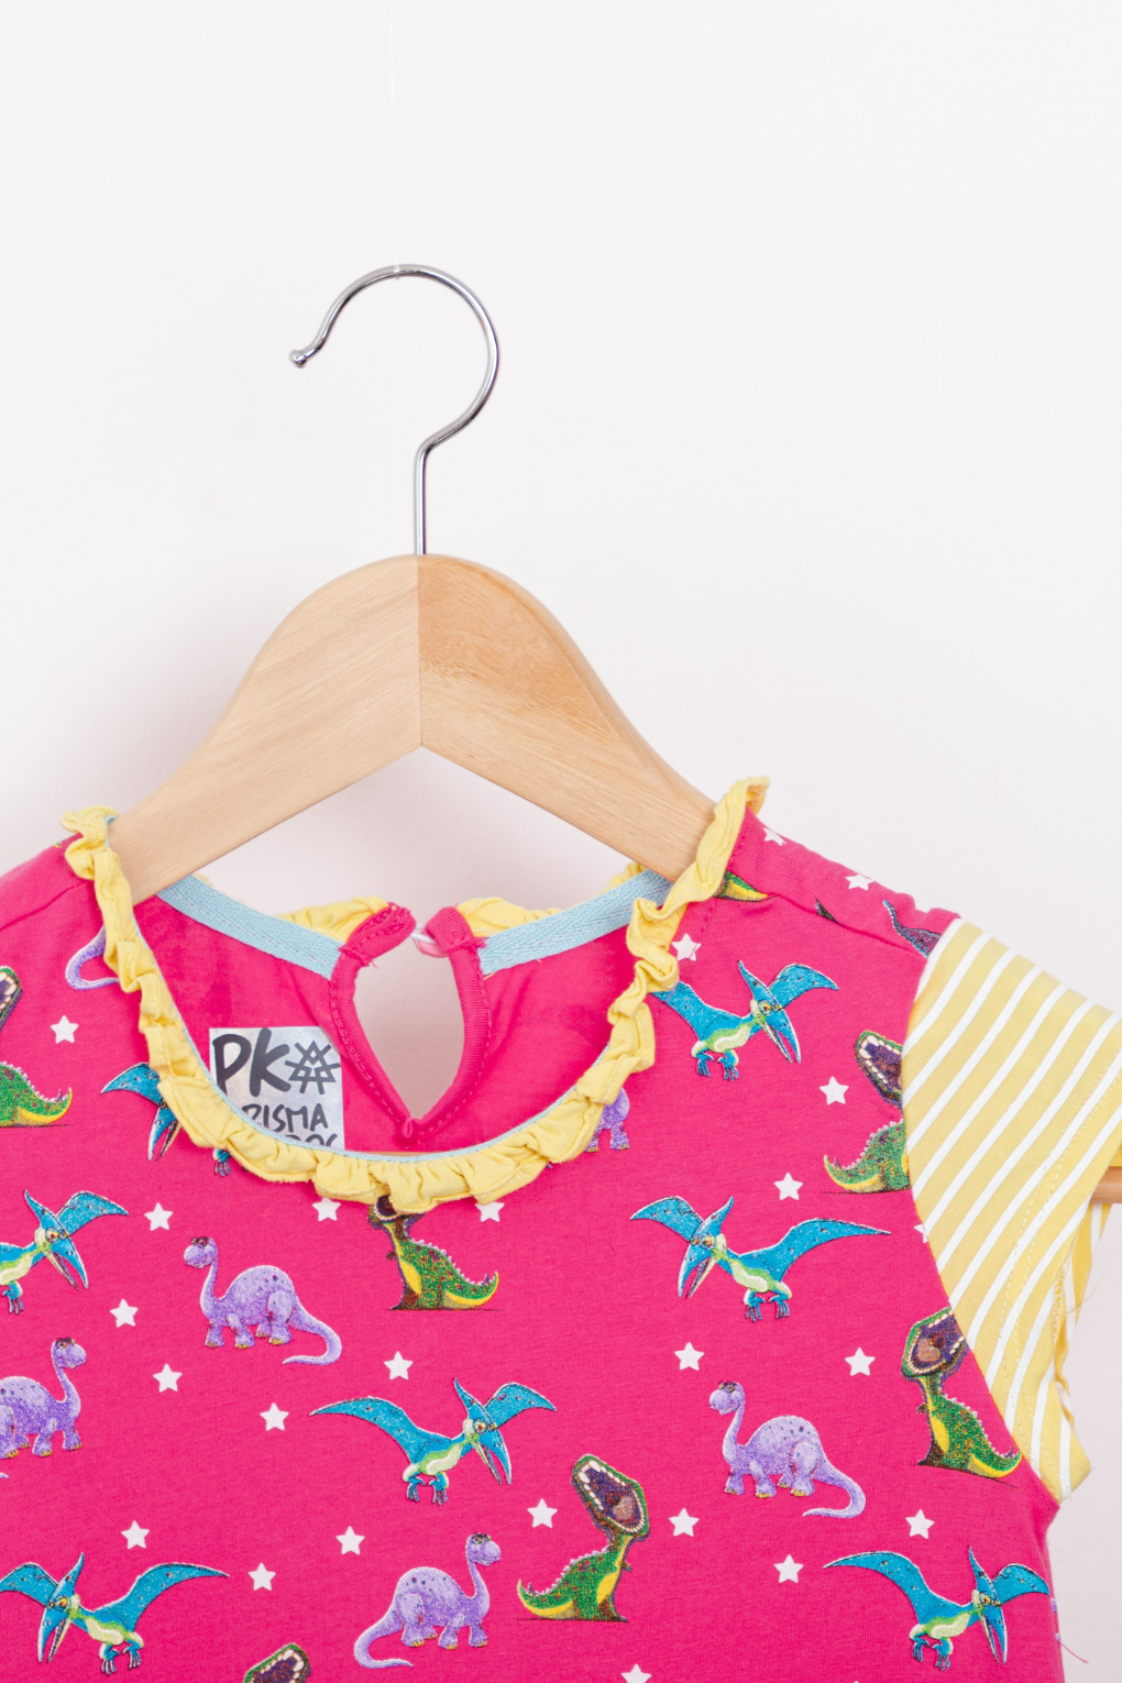 Dinosaur Dress with pockets, peruvian pima cotton, comfortable clothing, girl dress, children fashion, STEM and Non-Stereotypes designssma kiddos